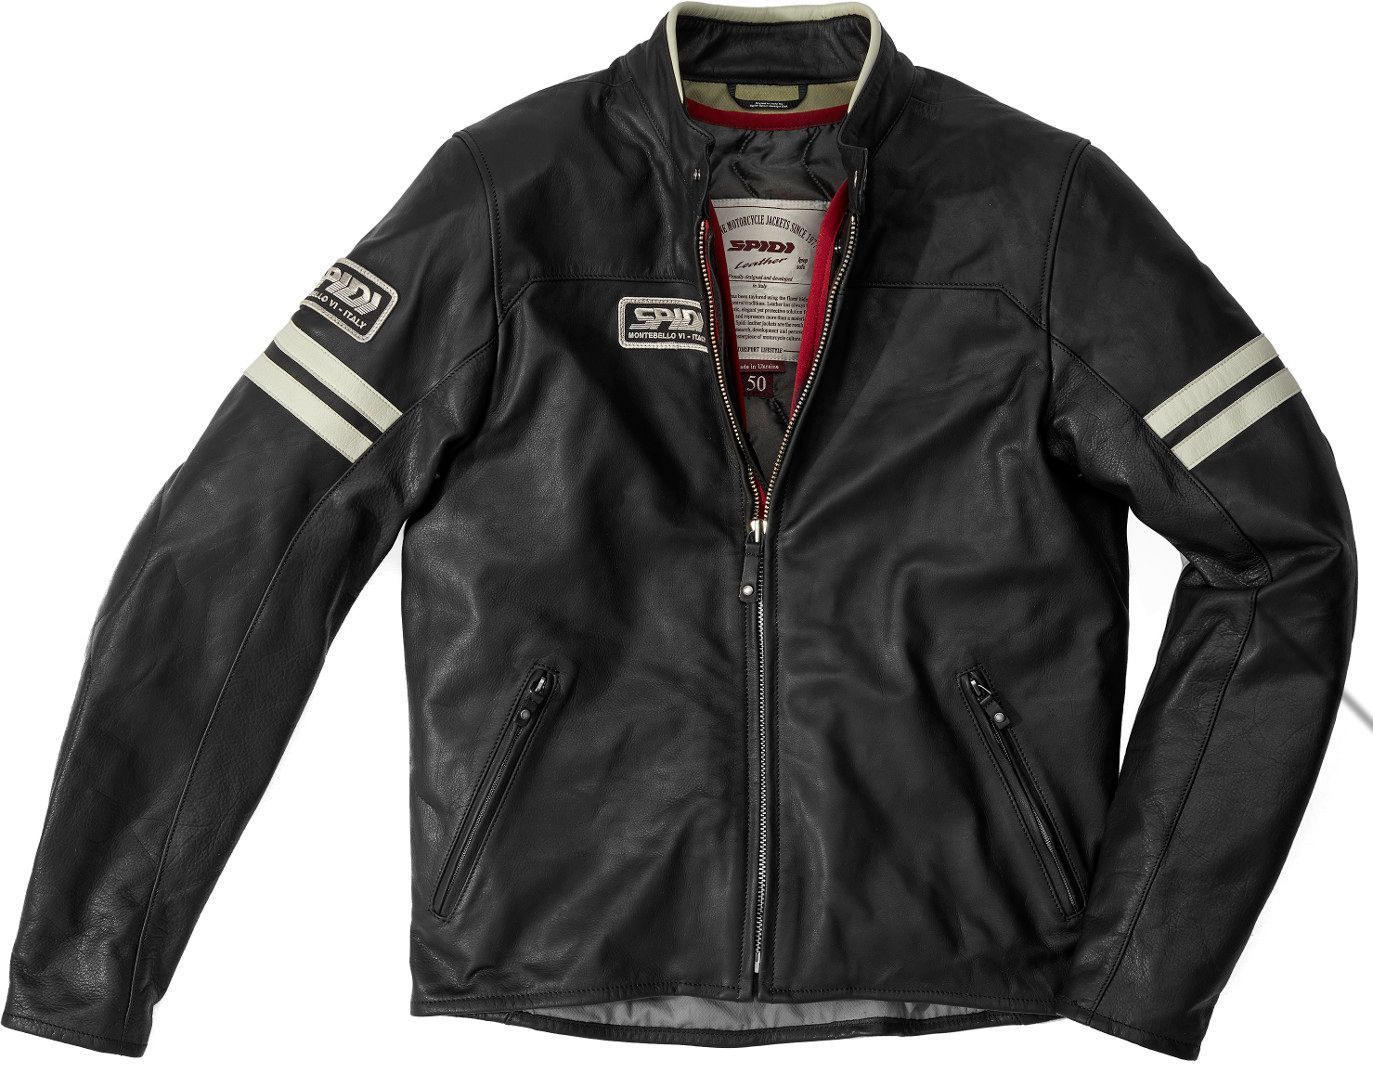 Spidi Vintage Motorcycle Leather Jacket, black-grey, Size 46, black-grey, Size 46